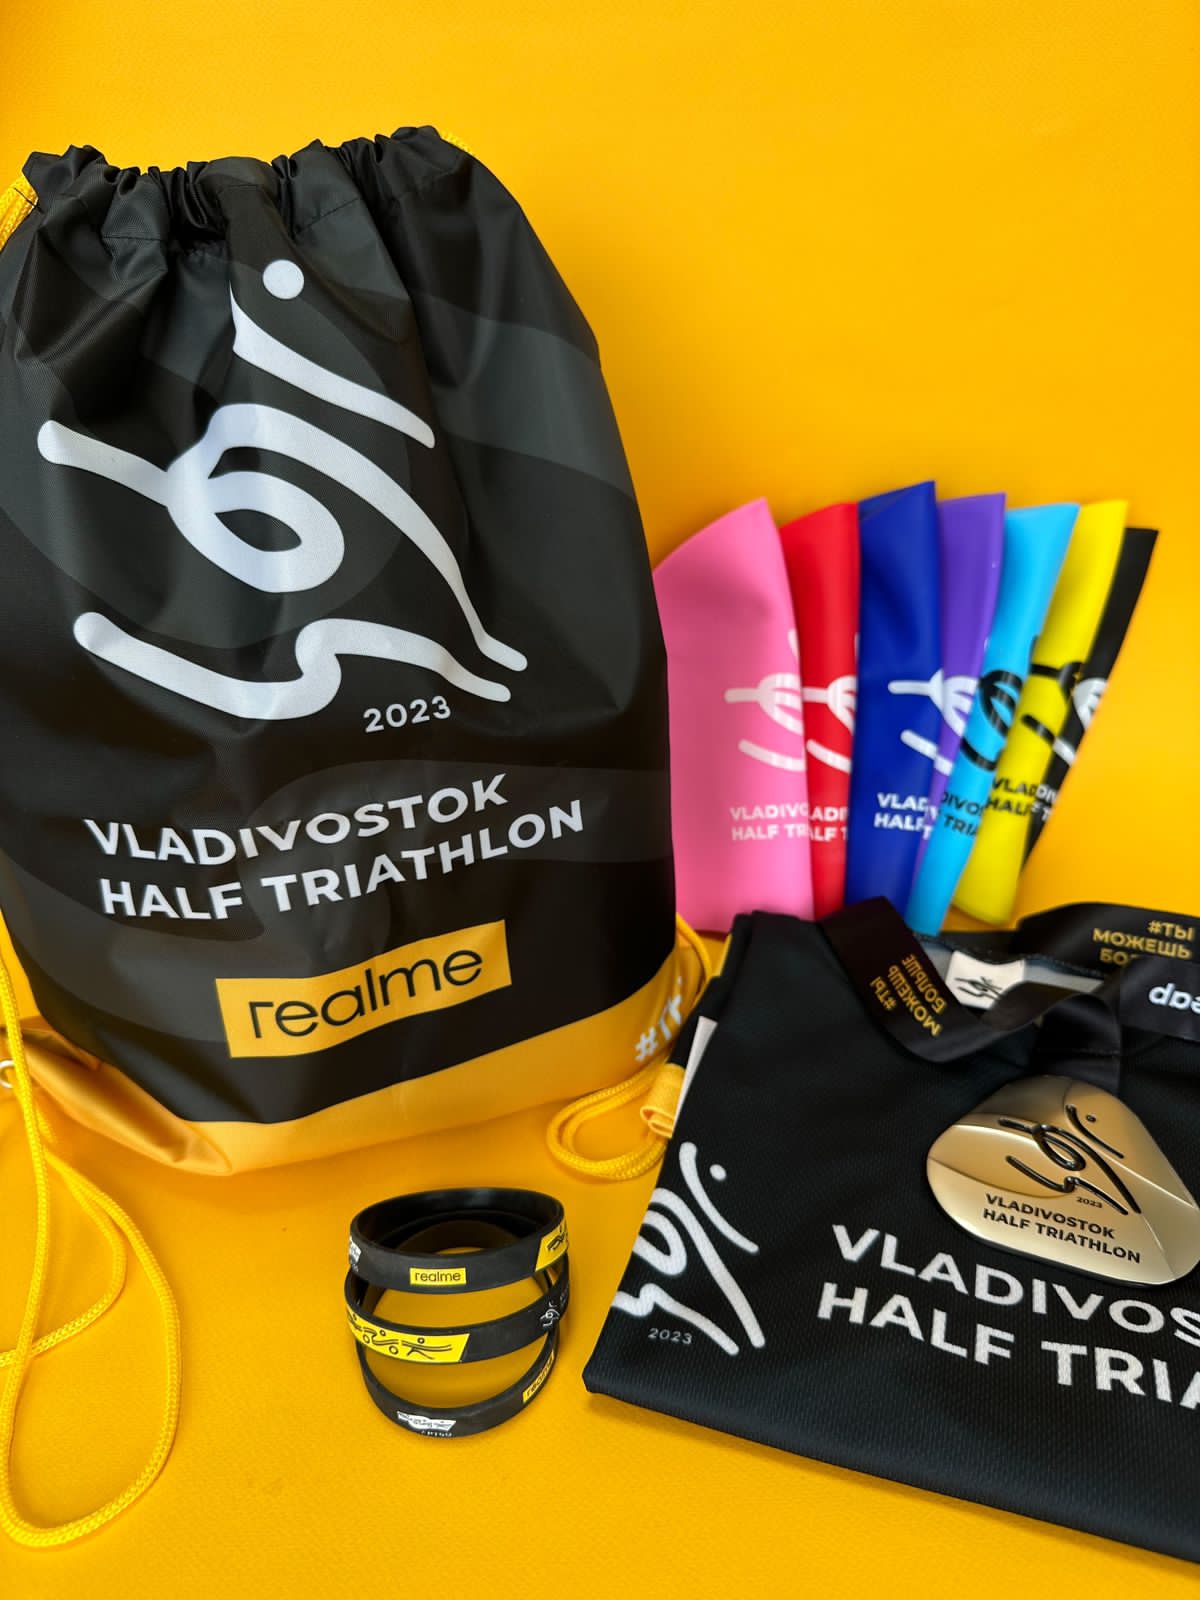 Vladivostok Half Triathlon